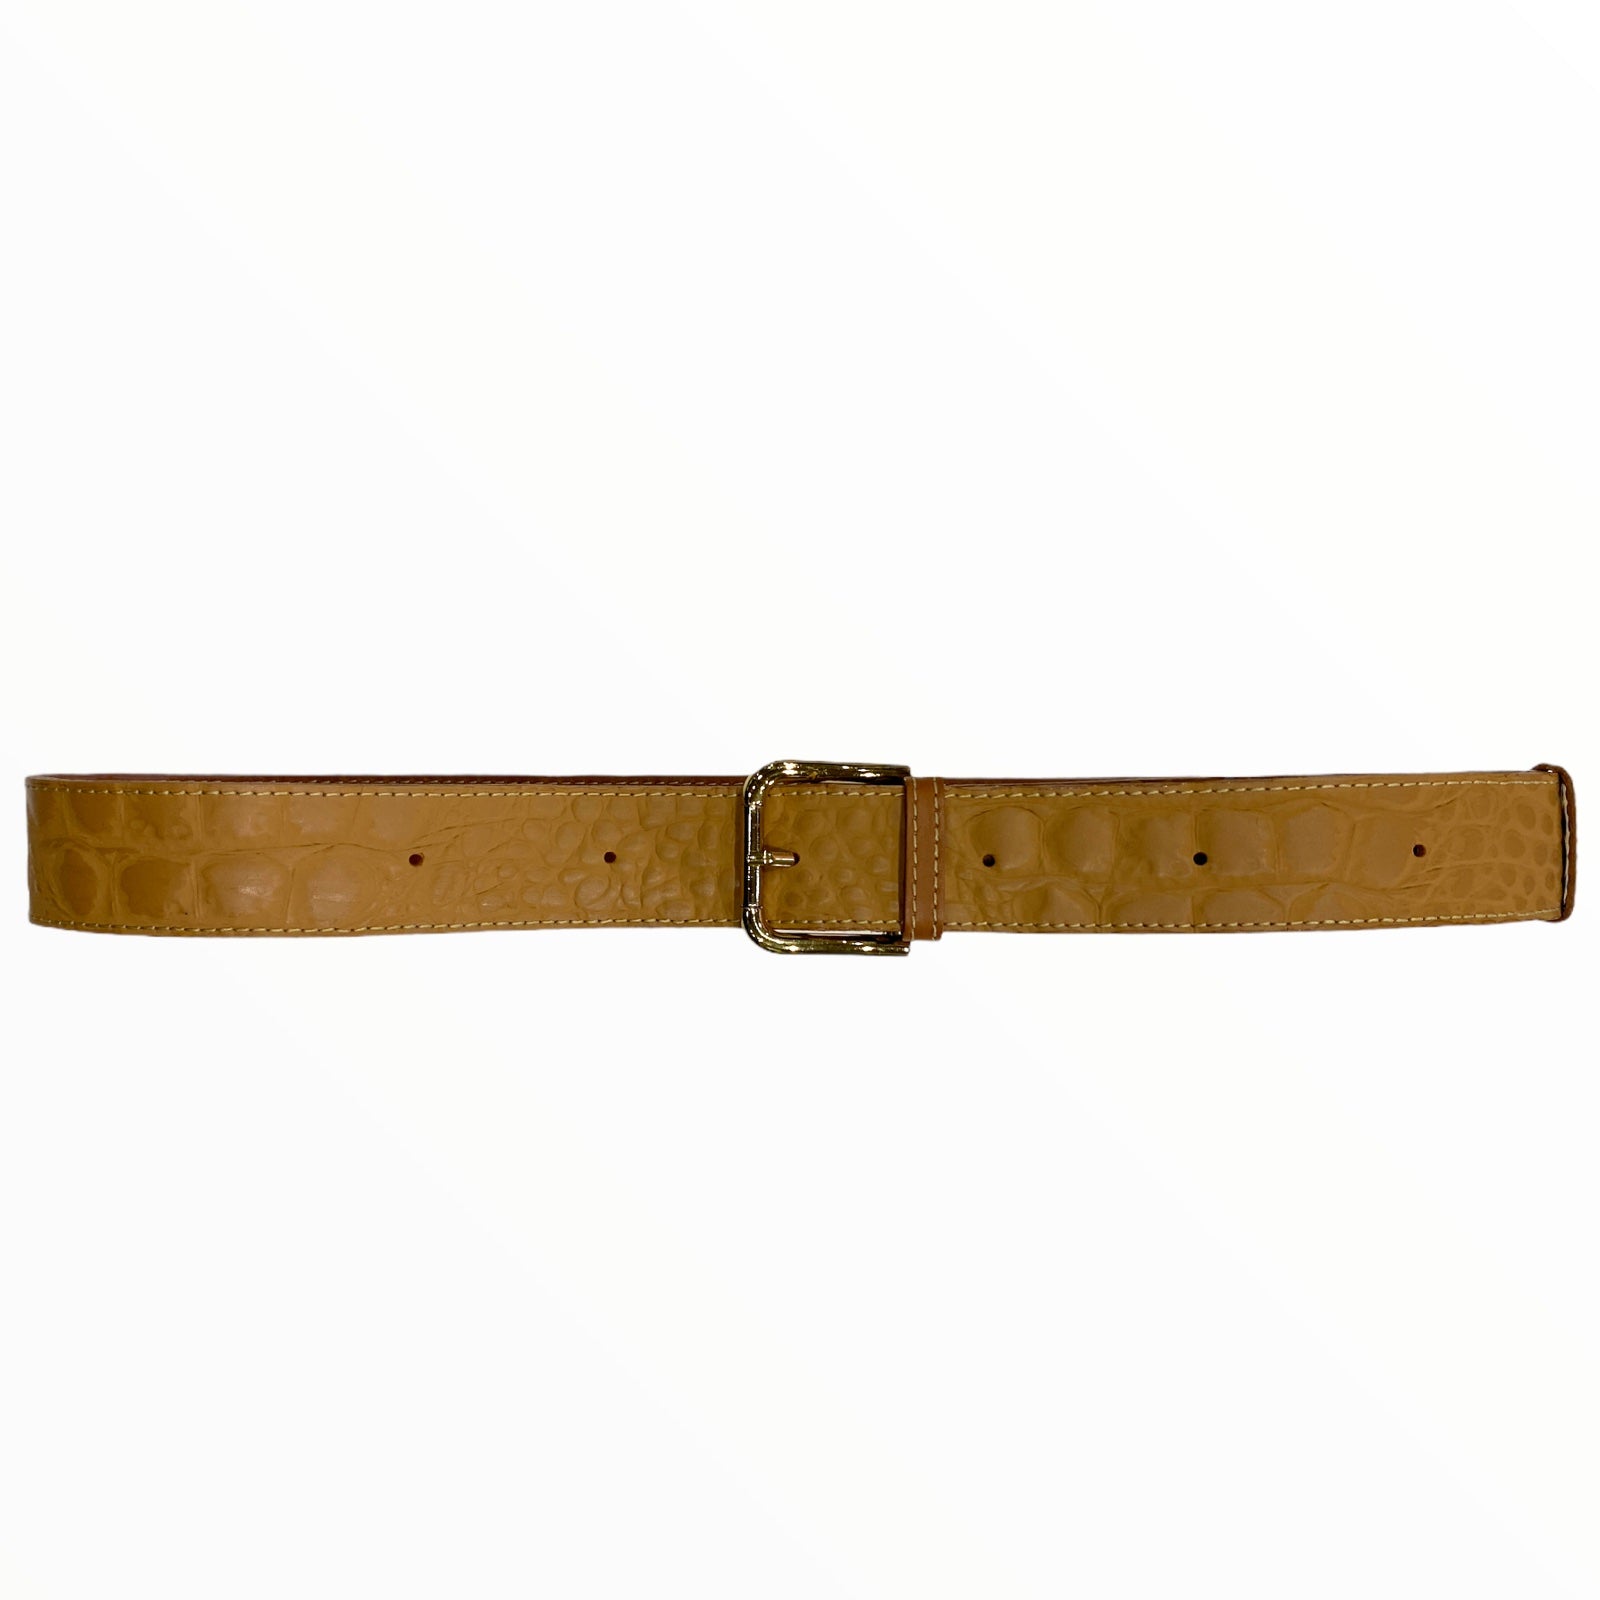 Carouzou leather belt